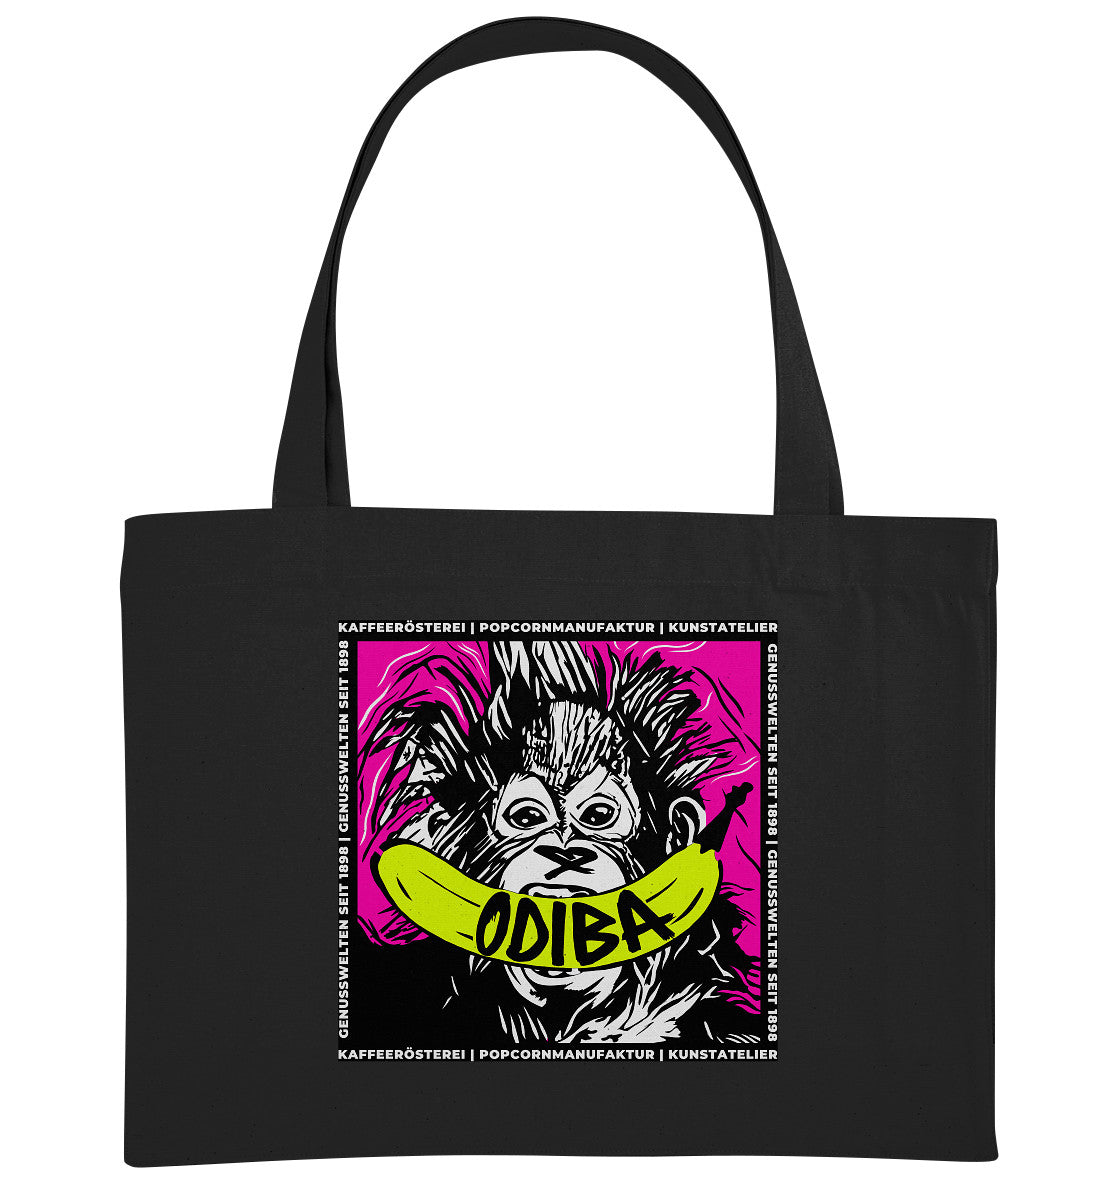 ODIBA Monkey - Organic Shopping-Bag